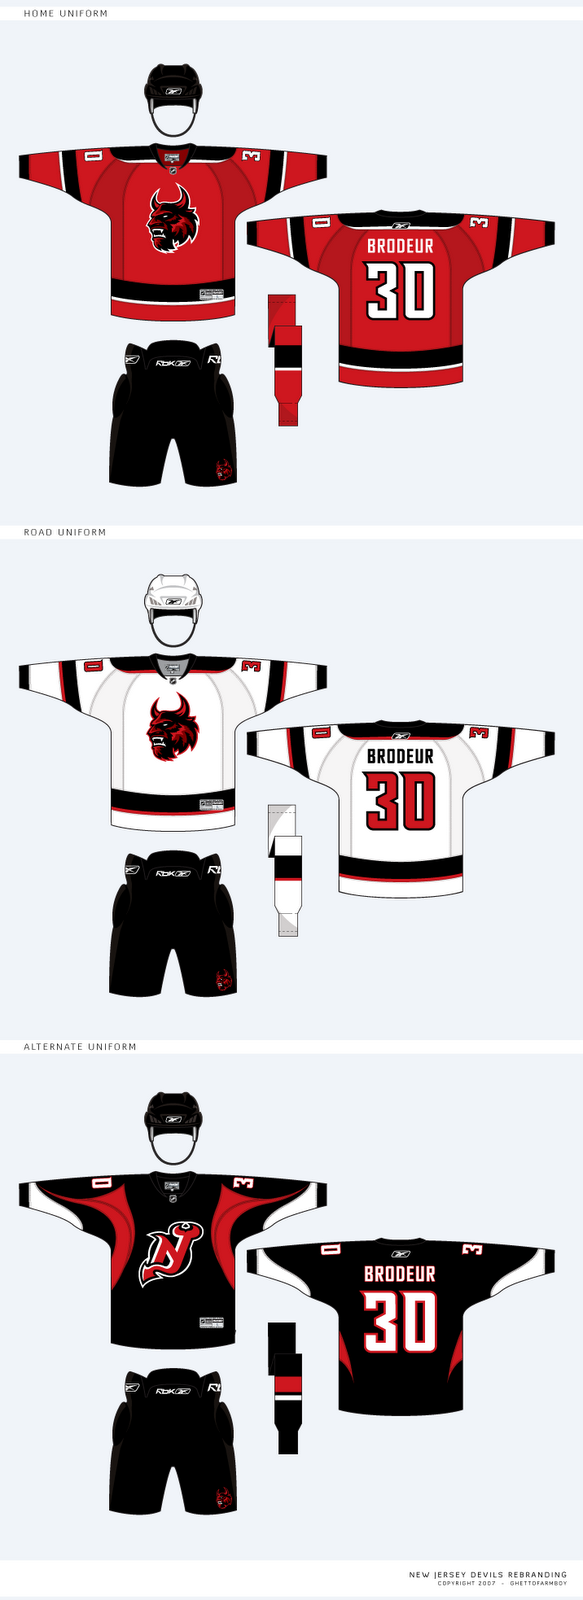 New Jersey Devils Alternate Uniform Concept